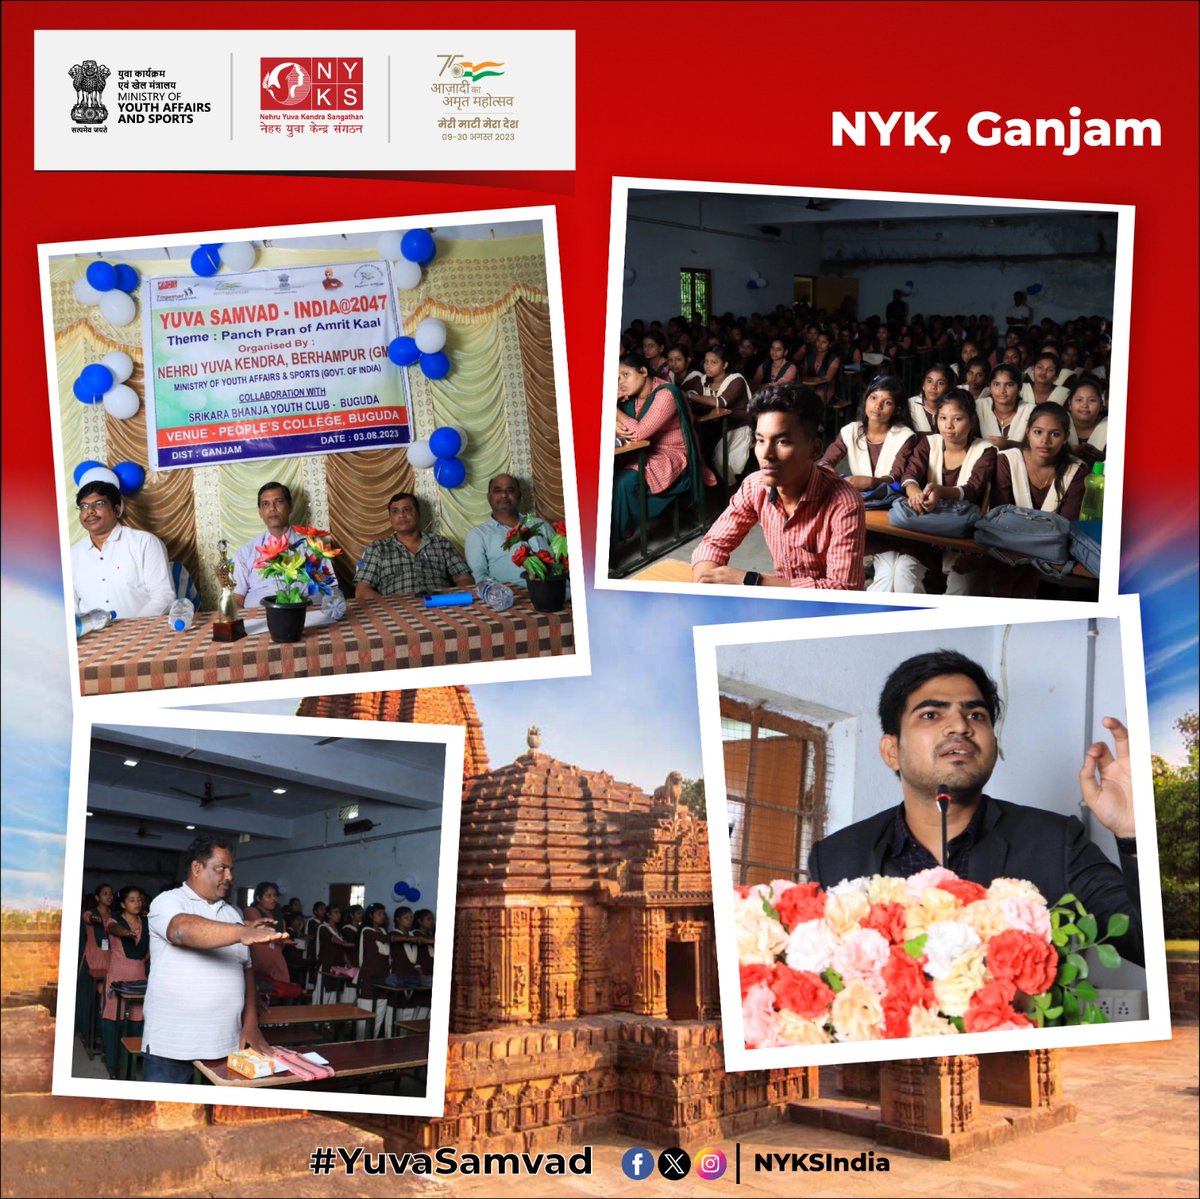 Nehru Yuva Kendra Ganjam(@NehruGanjam) organised the Yuva Samvad India@2047 program at People's College Buguda. More than 200 participants from the various blocks of the district attended the event.

#YuvaSamvad #YouthProgram #Ganjam #Odisha #India